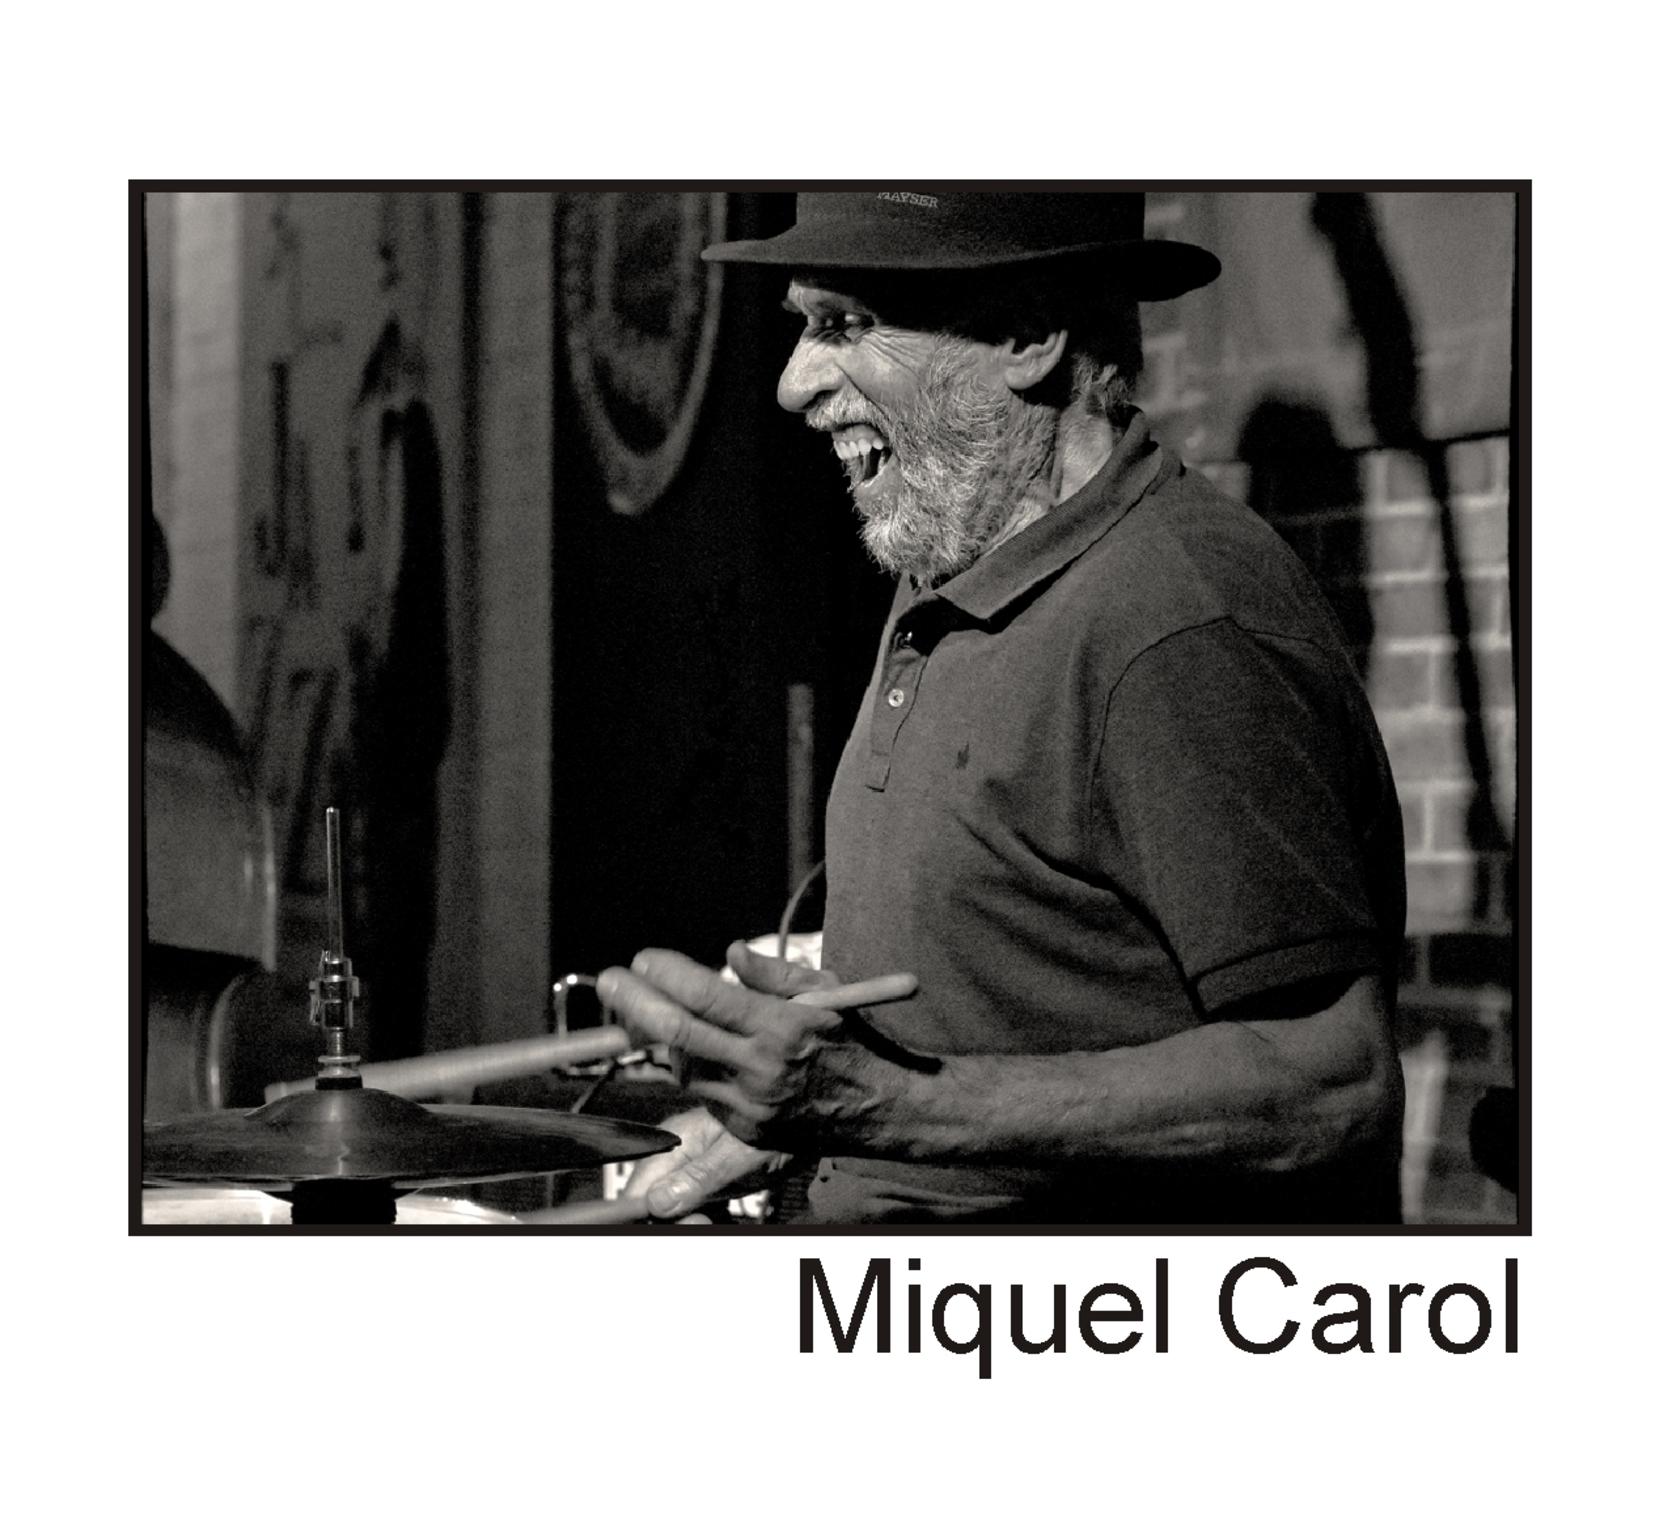  Miquel Carol